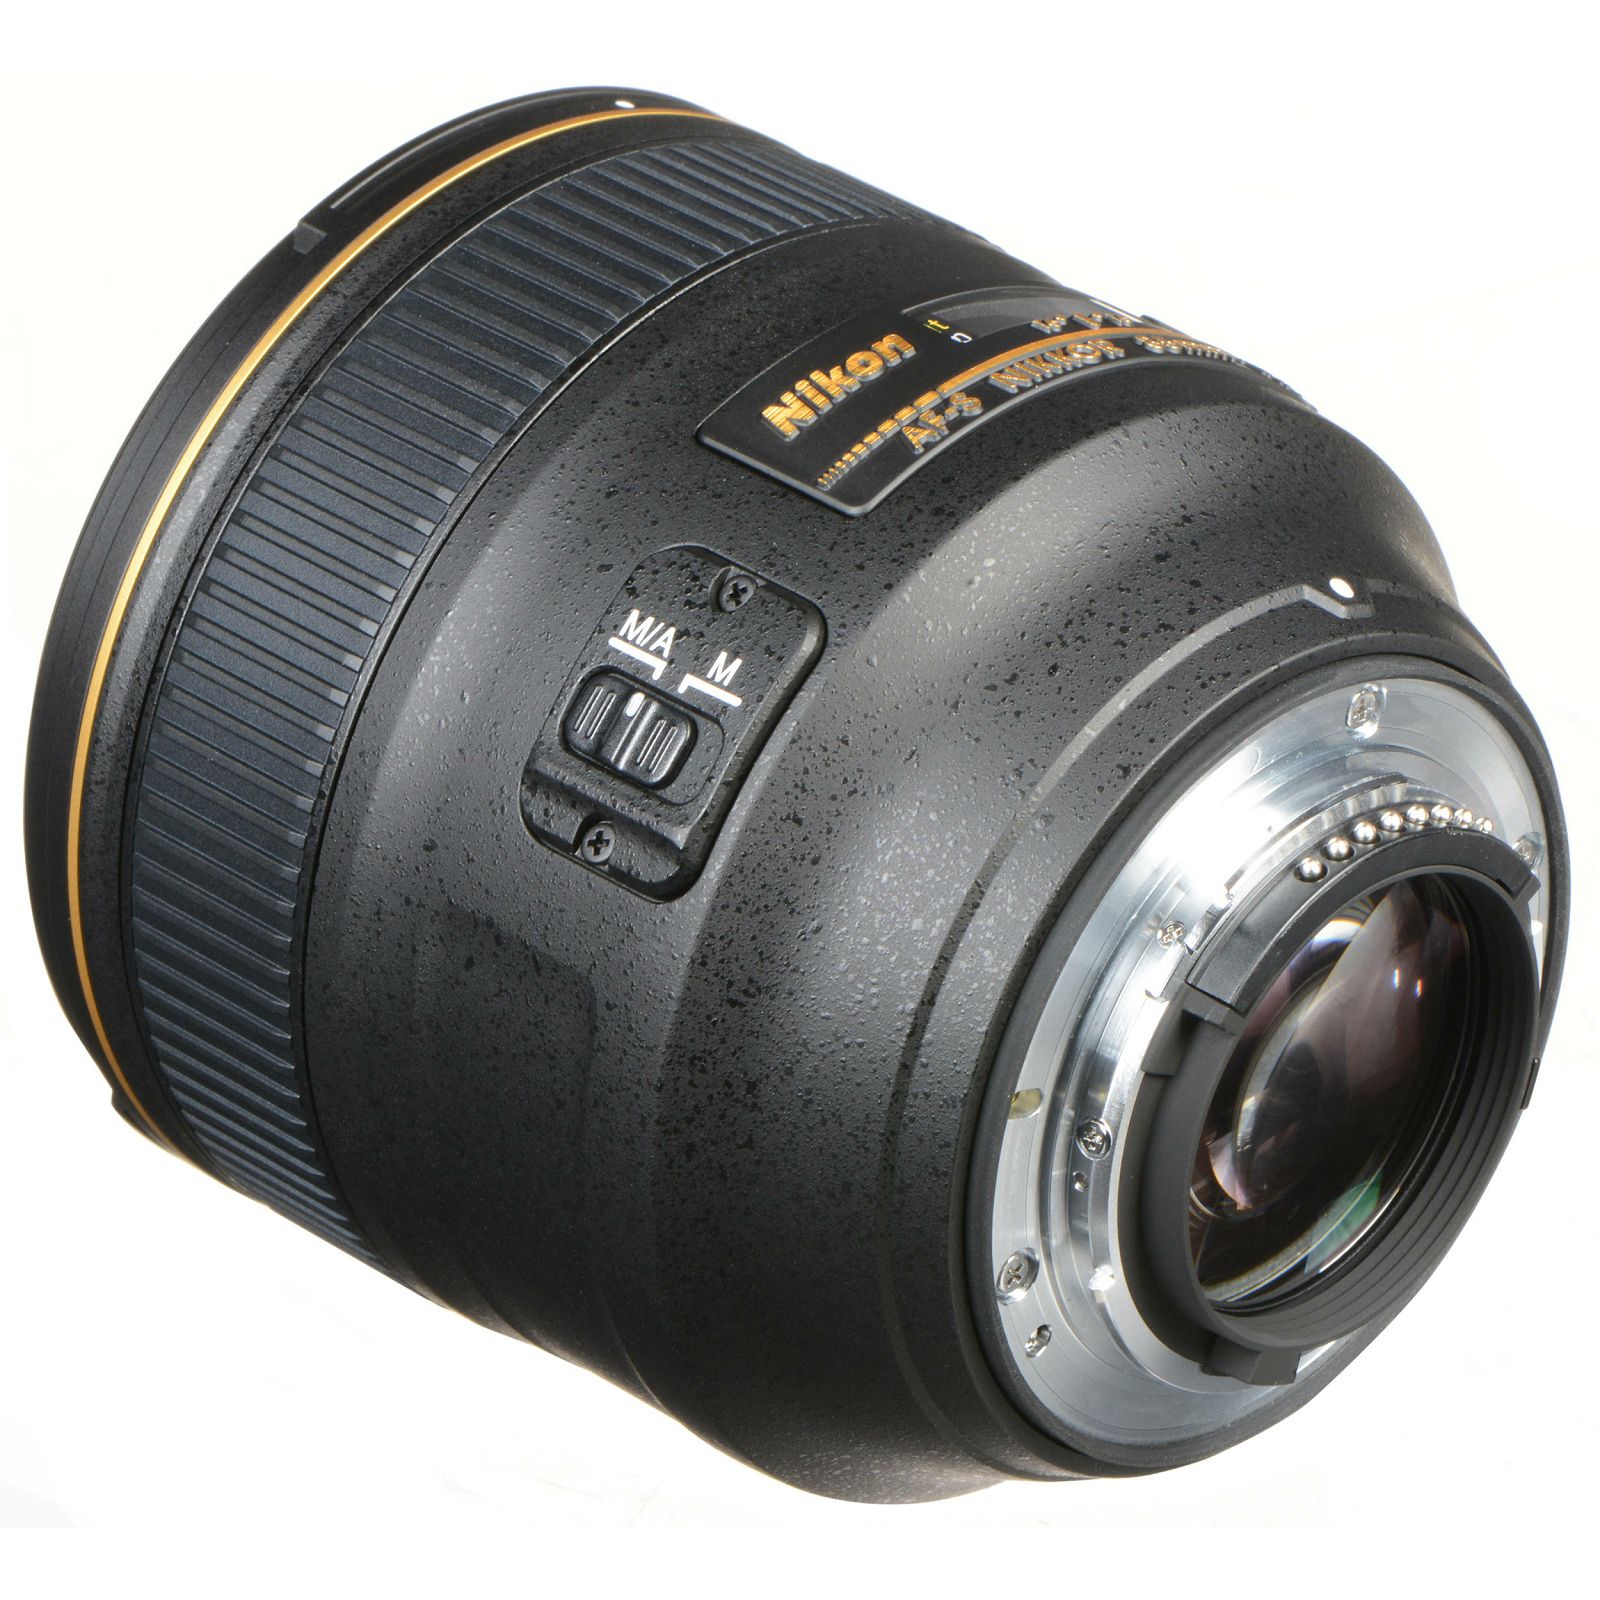 Nikon AF-S 85mm f/1.4G FX telefoto portretni objektiv Nikkor Professional auto focus prime lens 85 1.4G F1.4 G (JAA338DA)